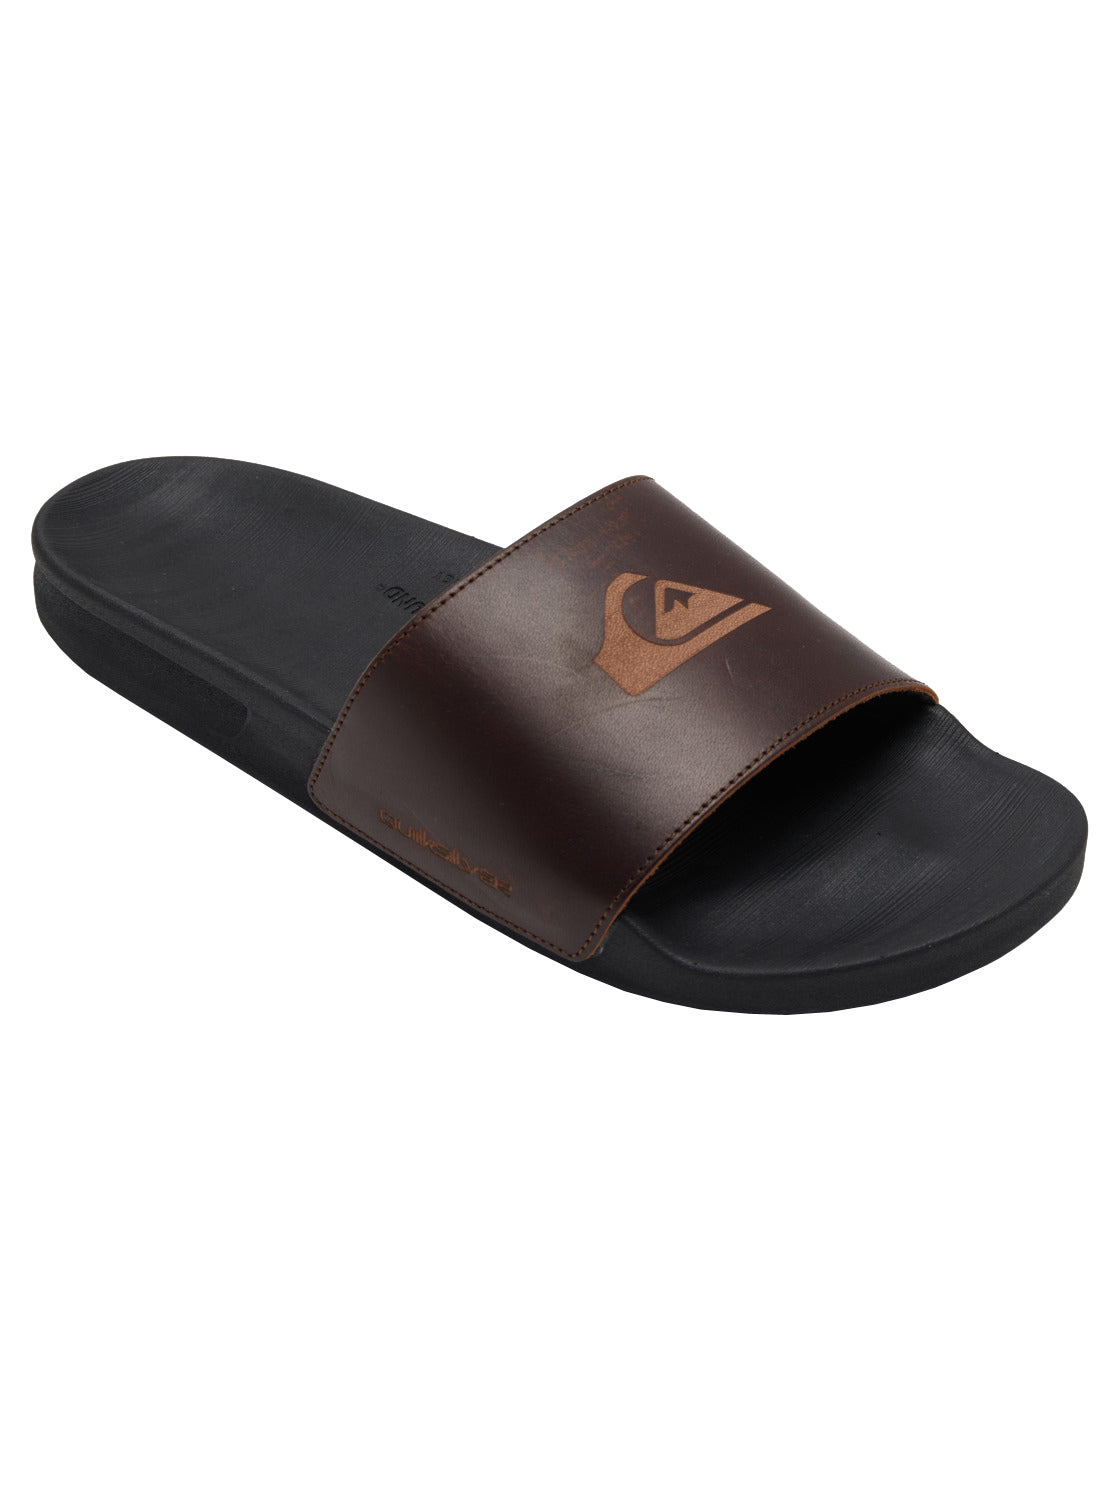 Quiksilver Rivi Leather Slide Mens Sandal XCKC-Brown-Black-Brown 13